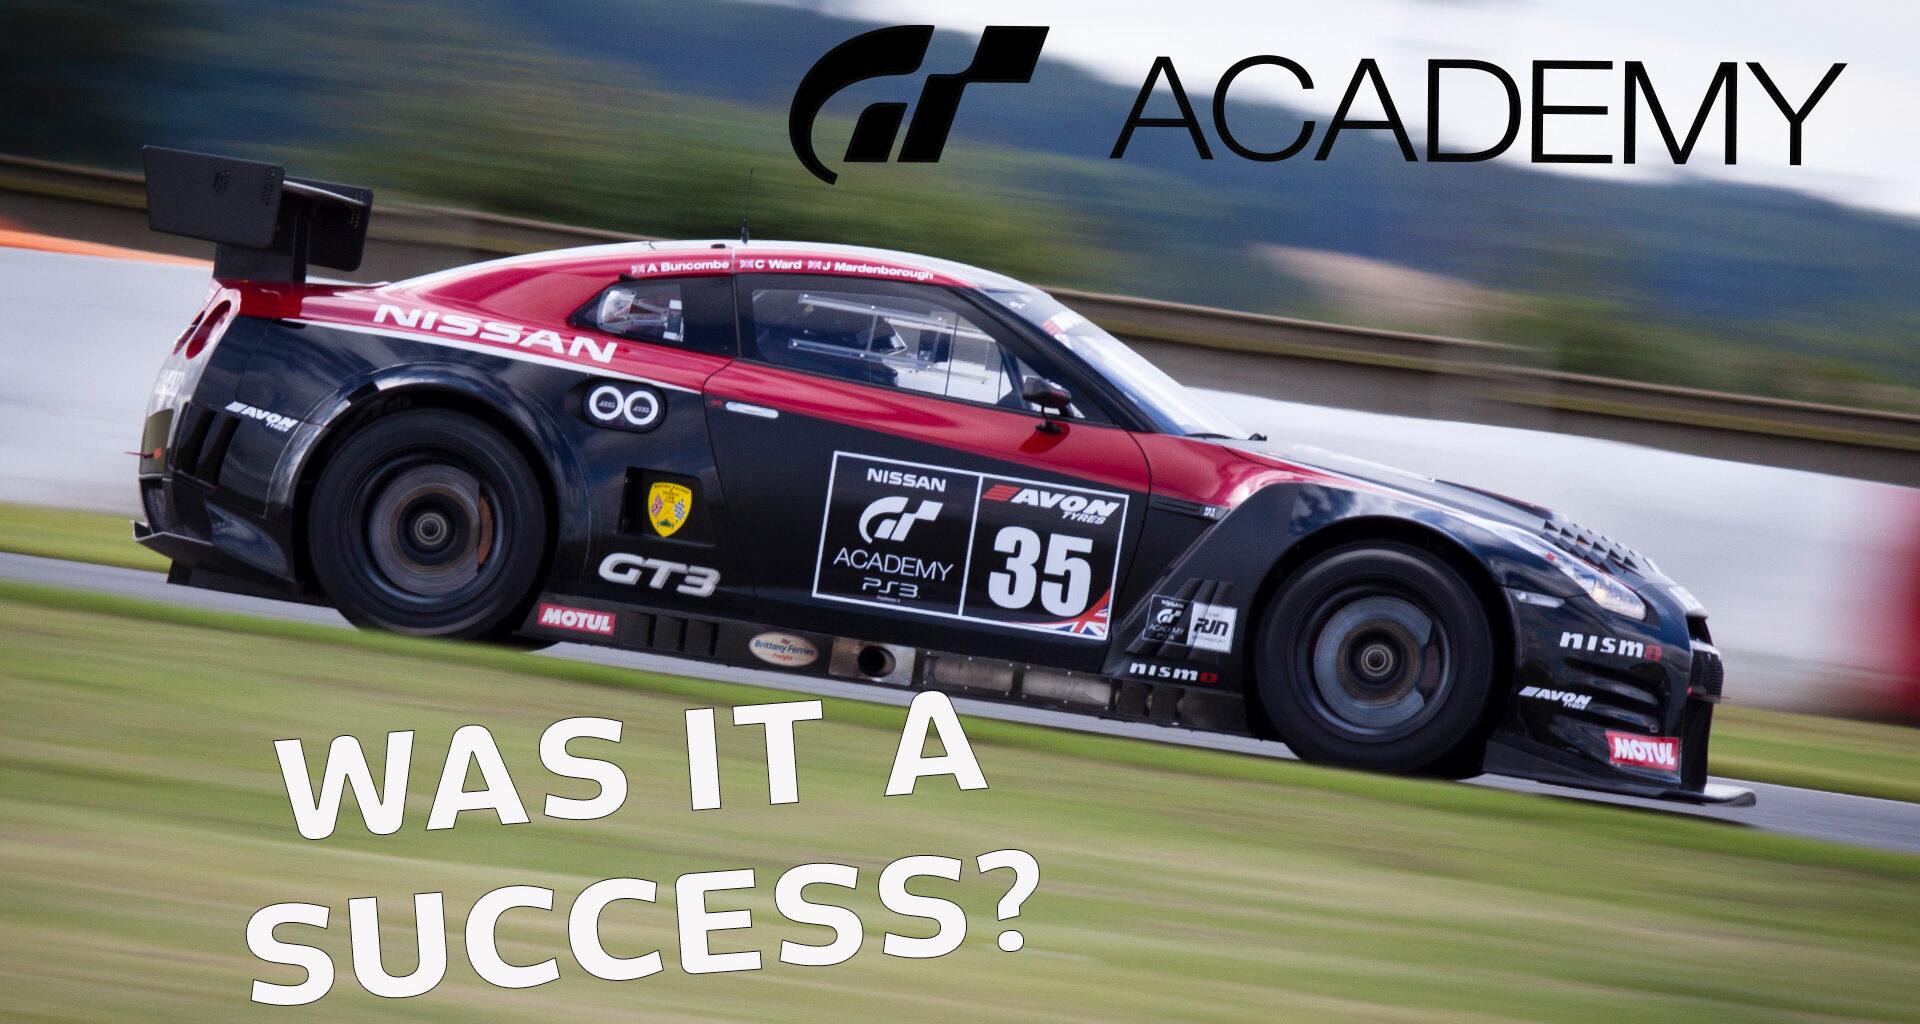 The successes and failures of the GT Academy. ALex Buncombe/Jann Mardenborough, Nissan GT-R GT3, Photographer: Ross McGregor